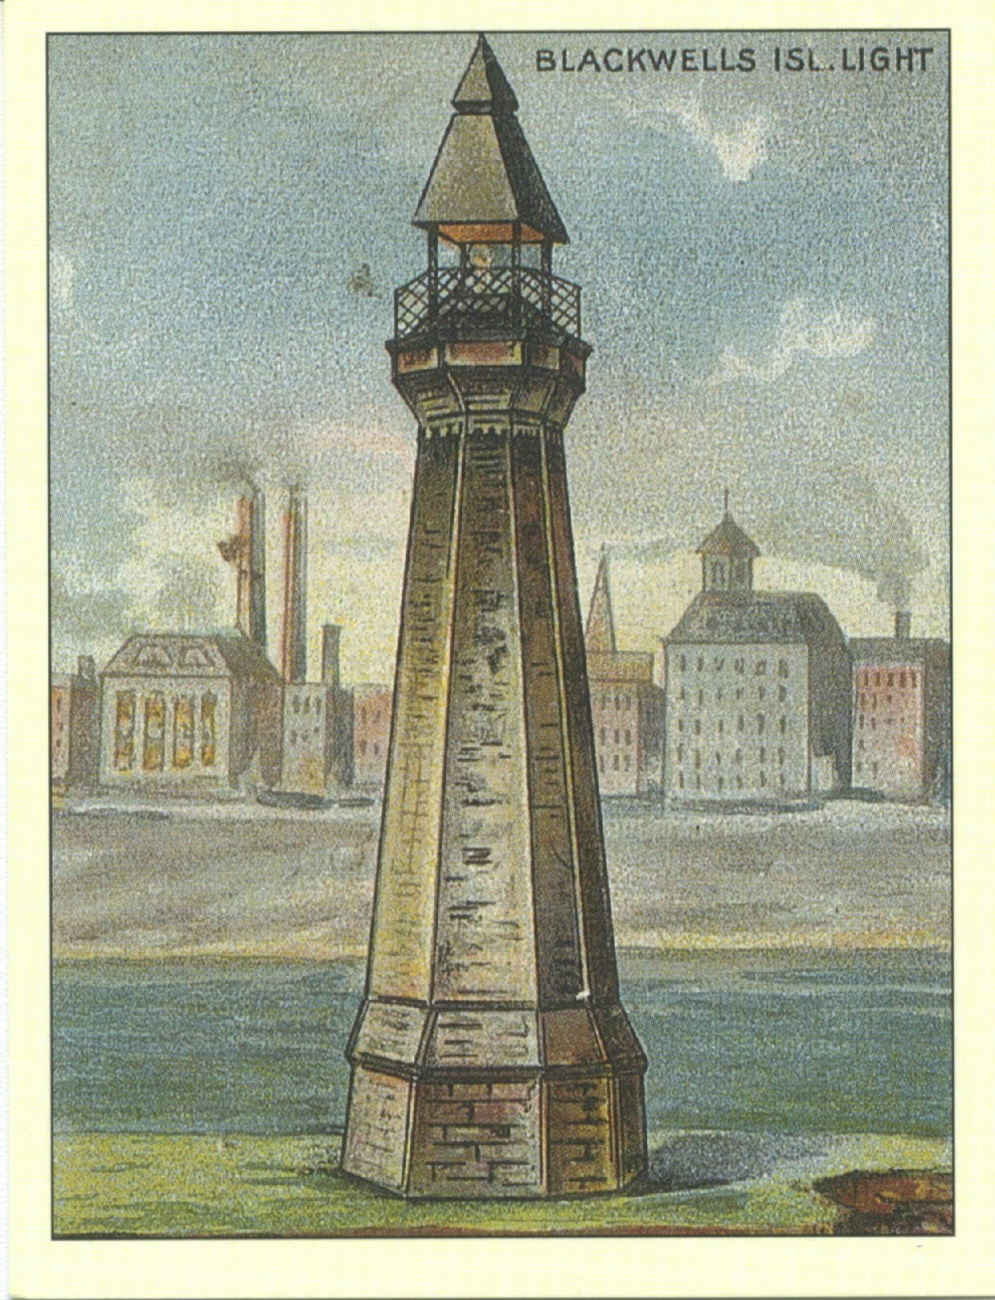 Blackwells Island Light